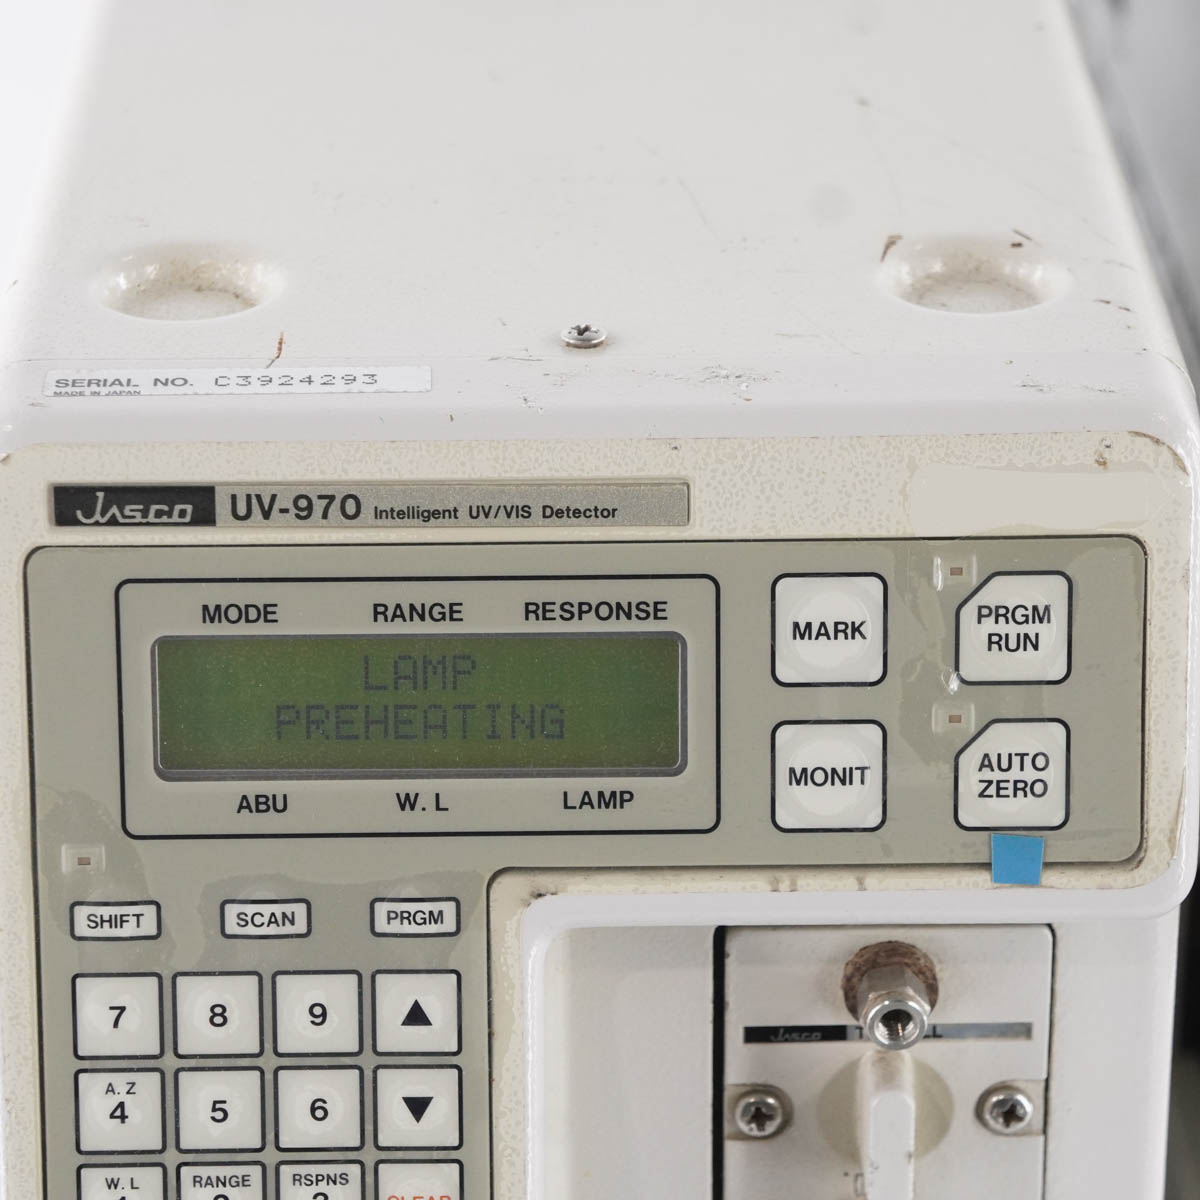 DW]USED 8日保証 セット JASCO AS-950 UV-970 PU-1580 HPLC Intelligent UV/VIS  Detector Sampler [04631-0001] 分析機器,液体クロマトグラフ 中古販売分析機器計測器総合商社ディルウィングス